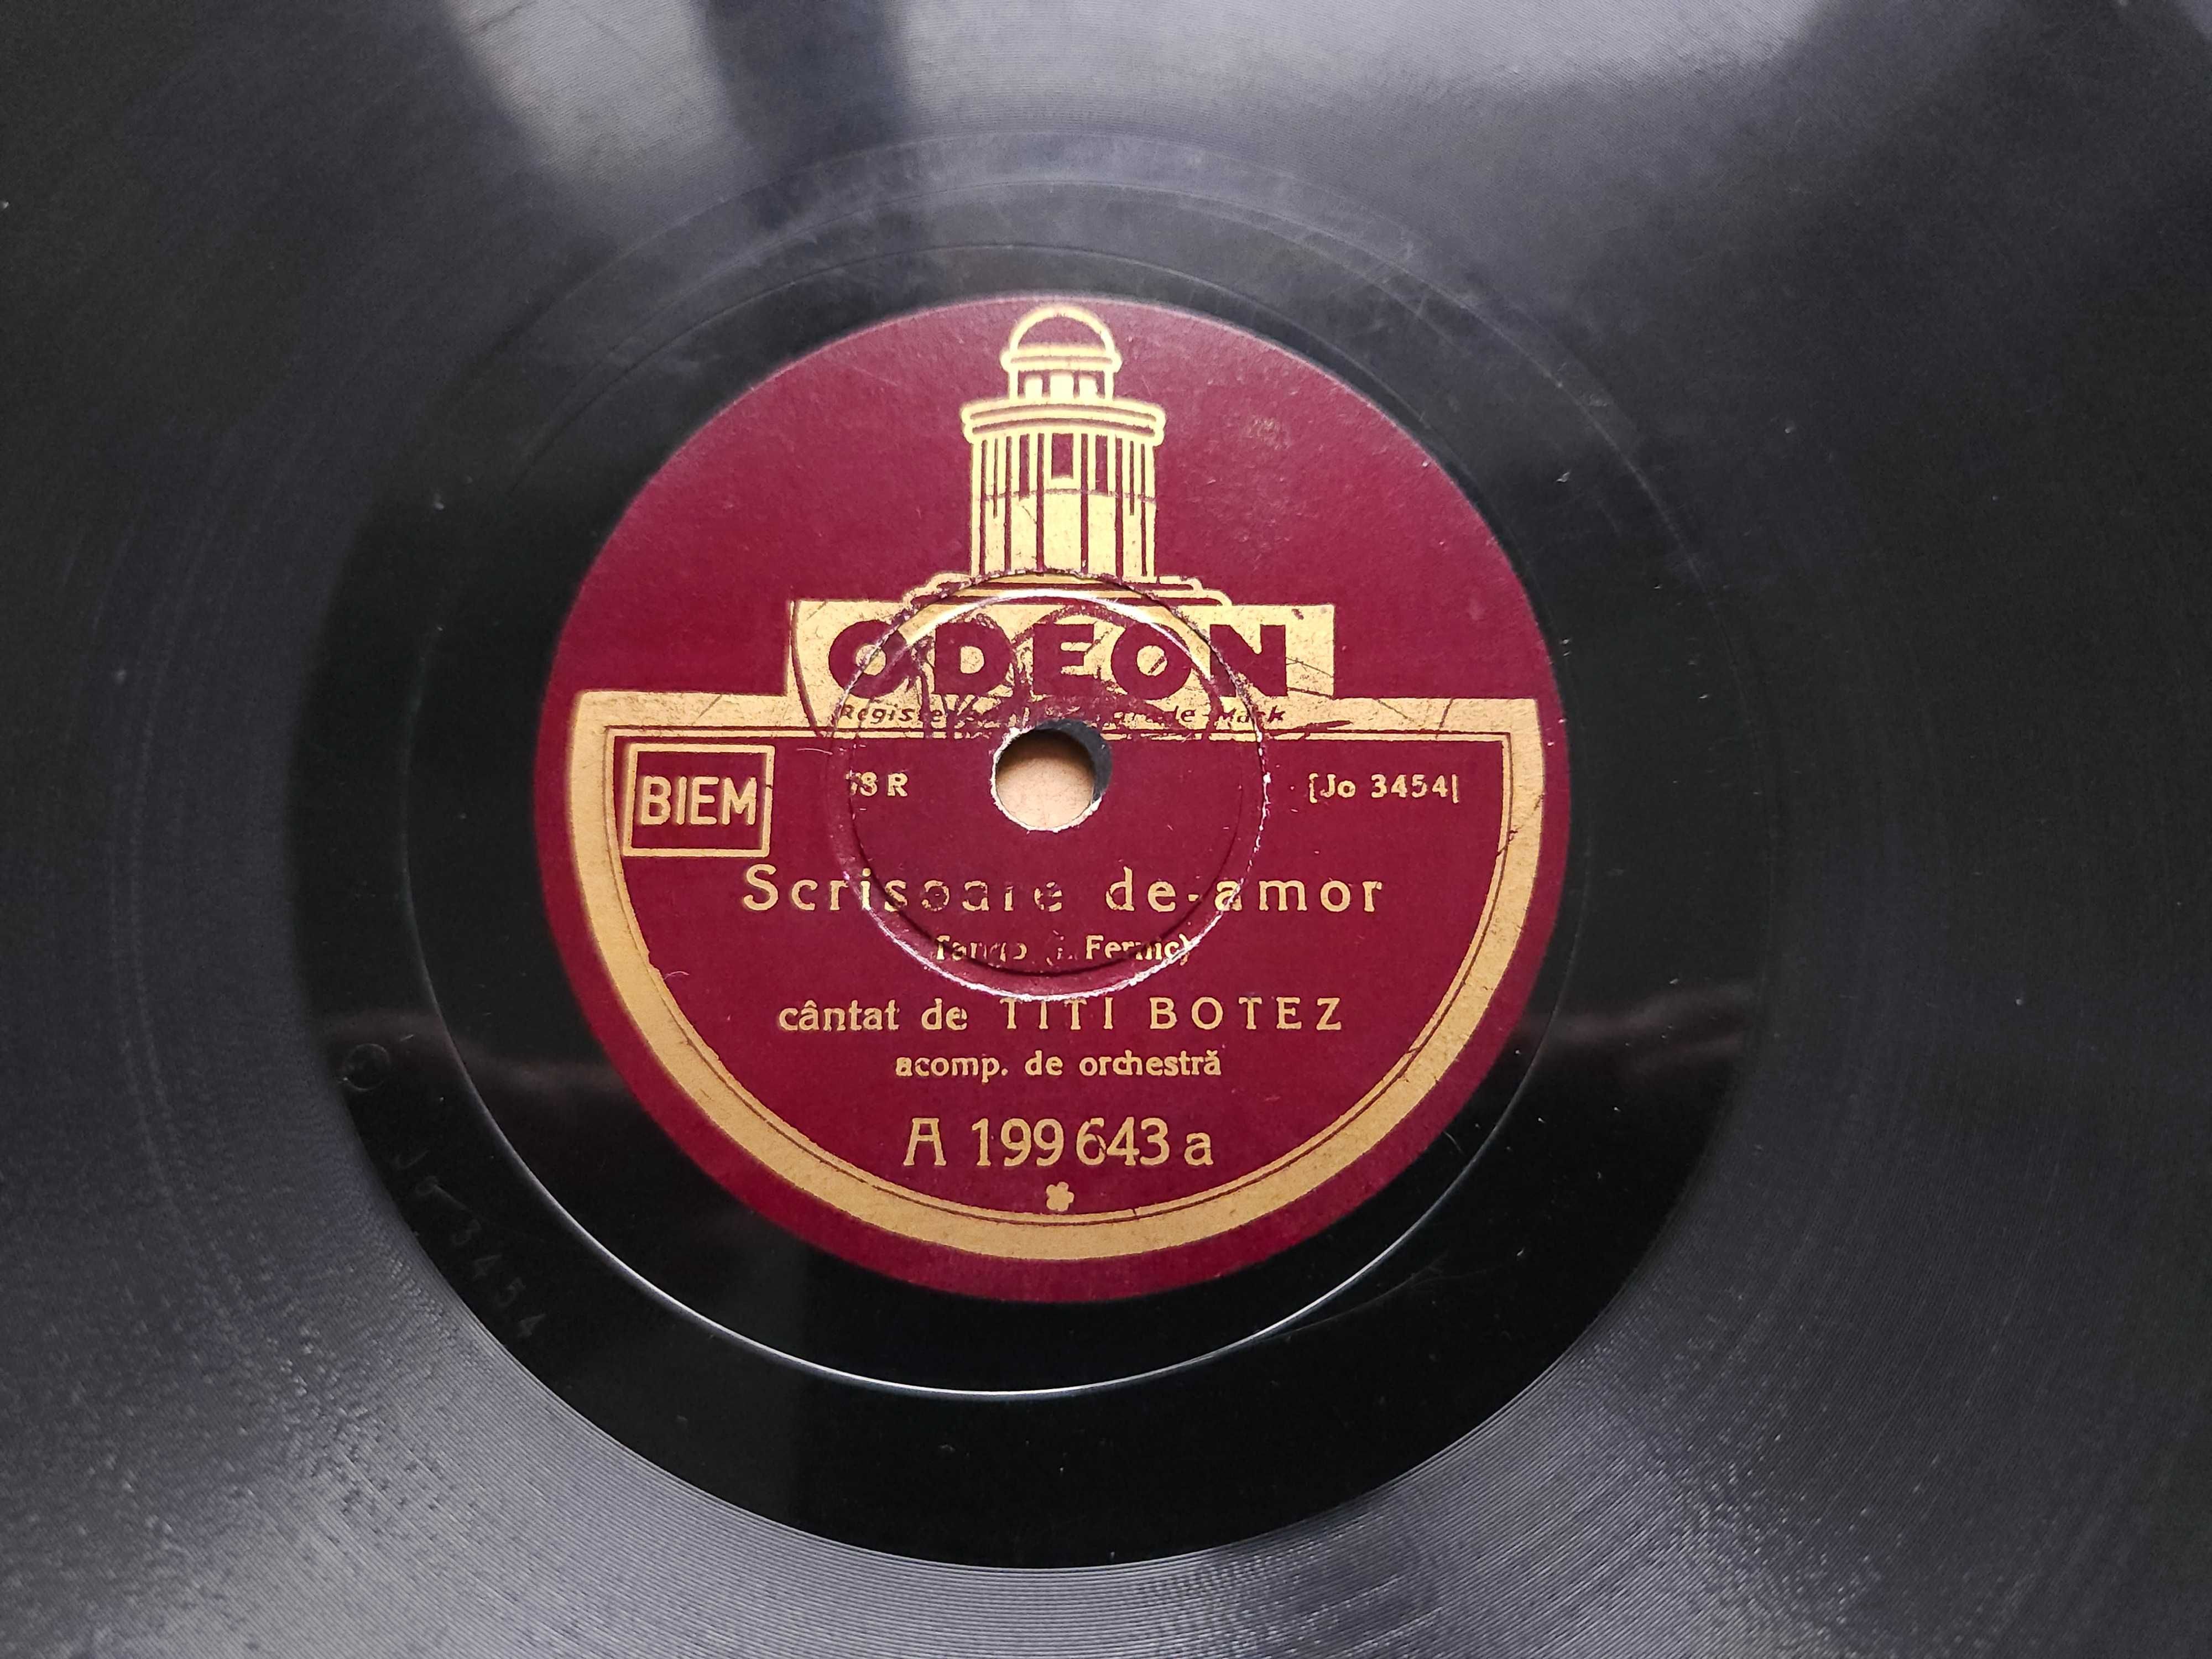 Discuri patefon gramofon Titi Botez Odeon lot 1